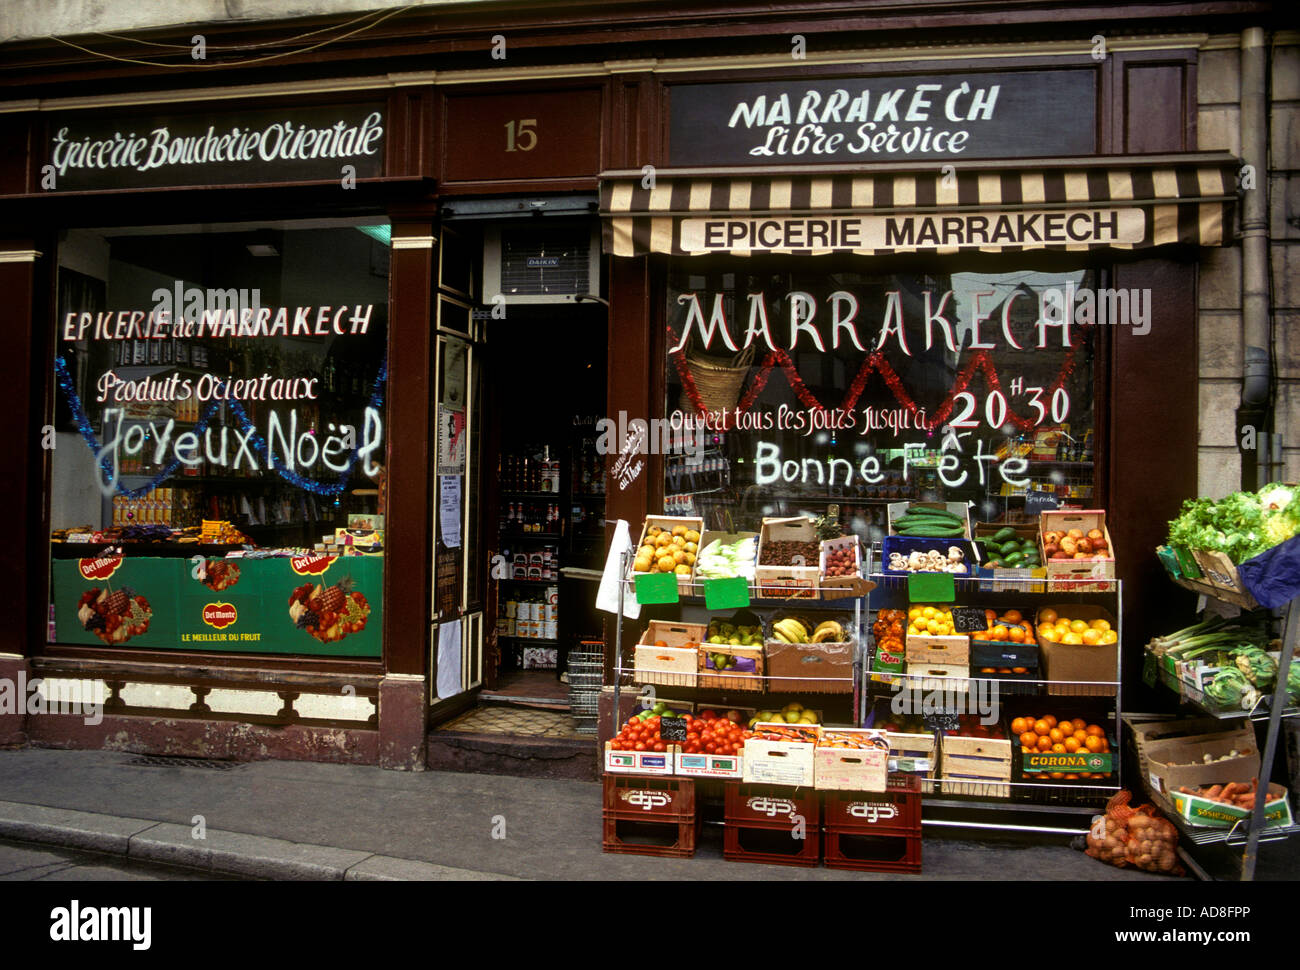 Epicerie de Marrakech, Marokko - besessene Markt, Marokkanische - besessene  Lebensmittelgeschäft, Supermarkt, Storefront, Stadt Strasbourg, Straßburg,  Elsass, Frankreich Stockfotografie - Alamy